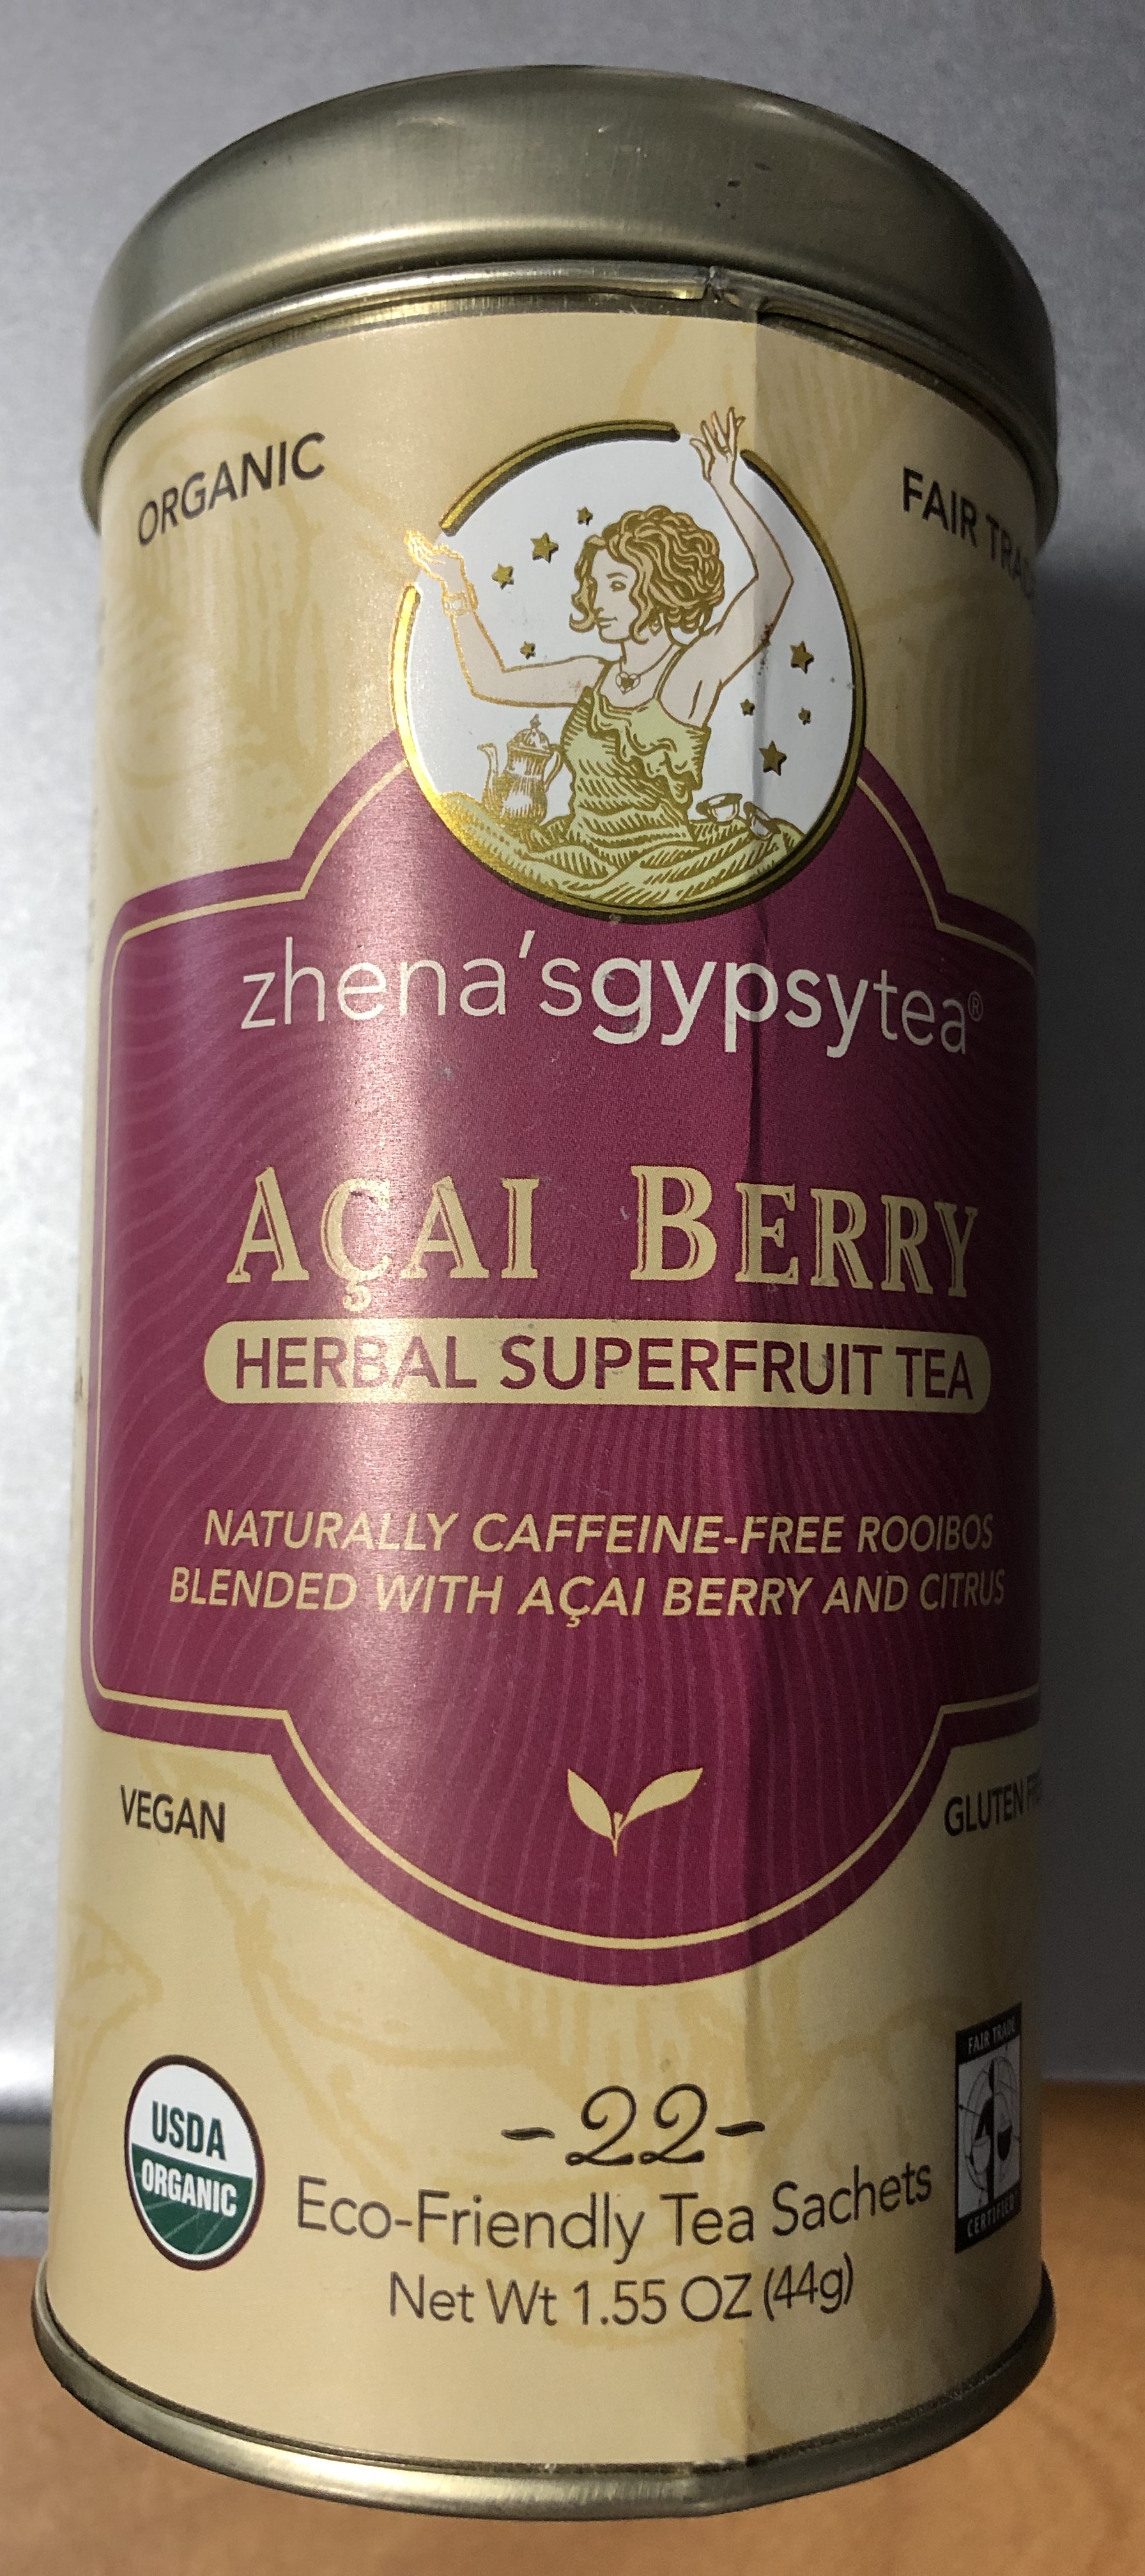 Zhena's Gypsy Acai Berry Superfruit Tea